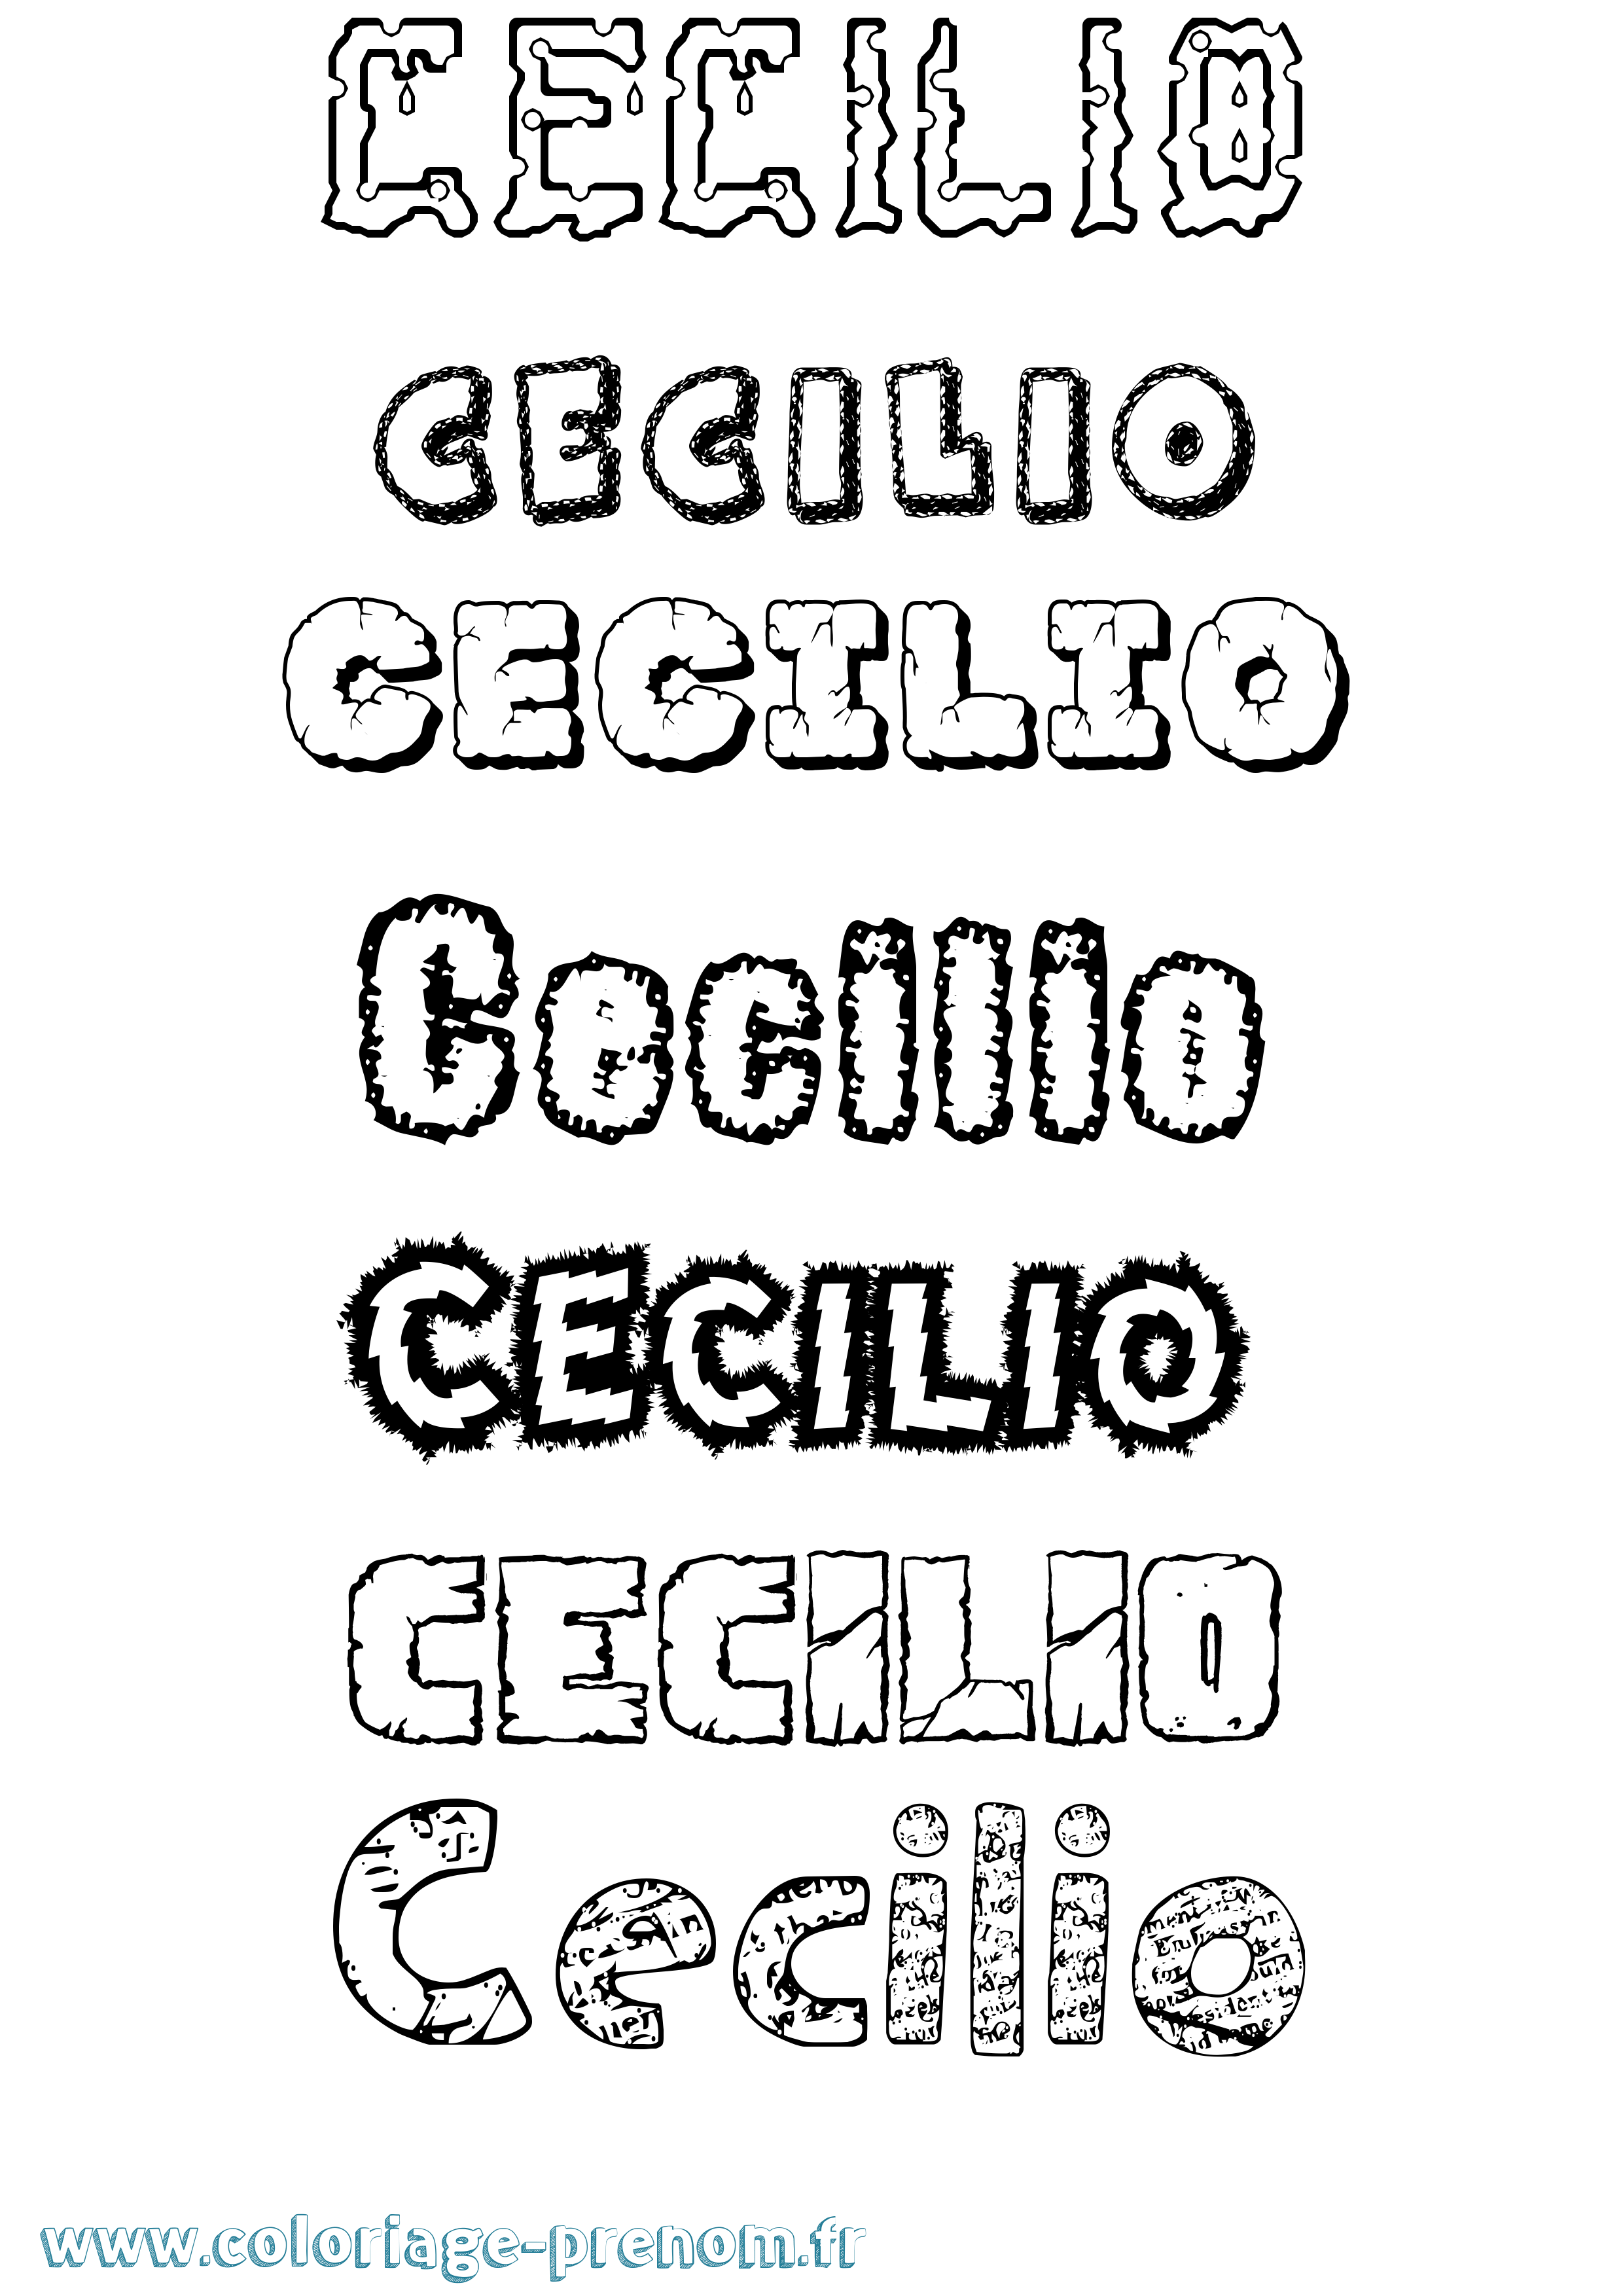 Coloriage prénom Cecilio Destructuré